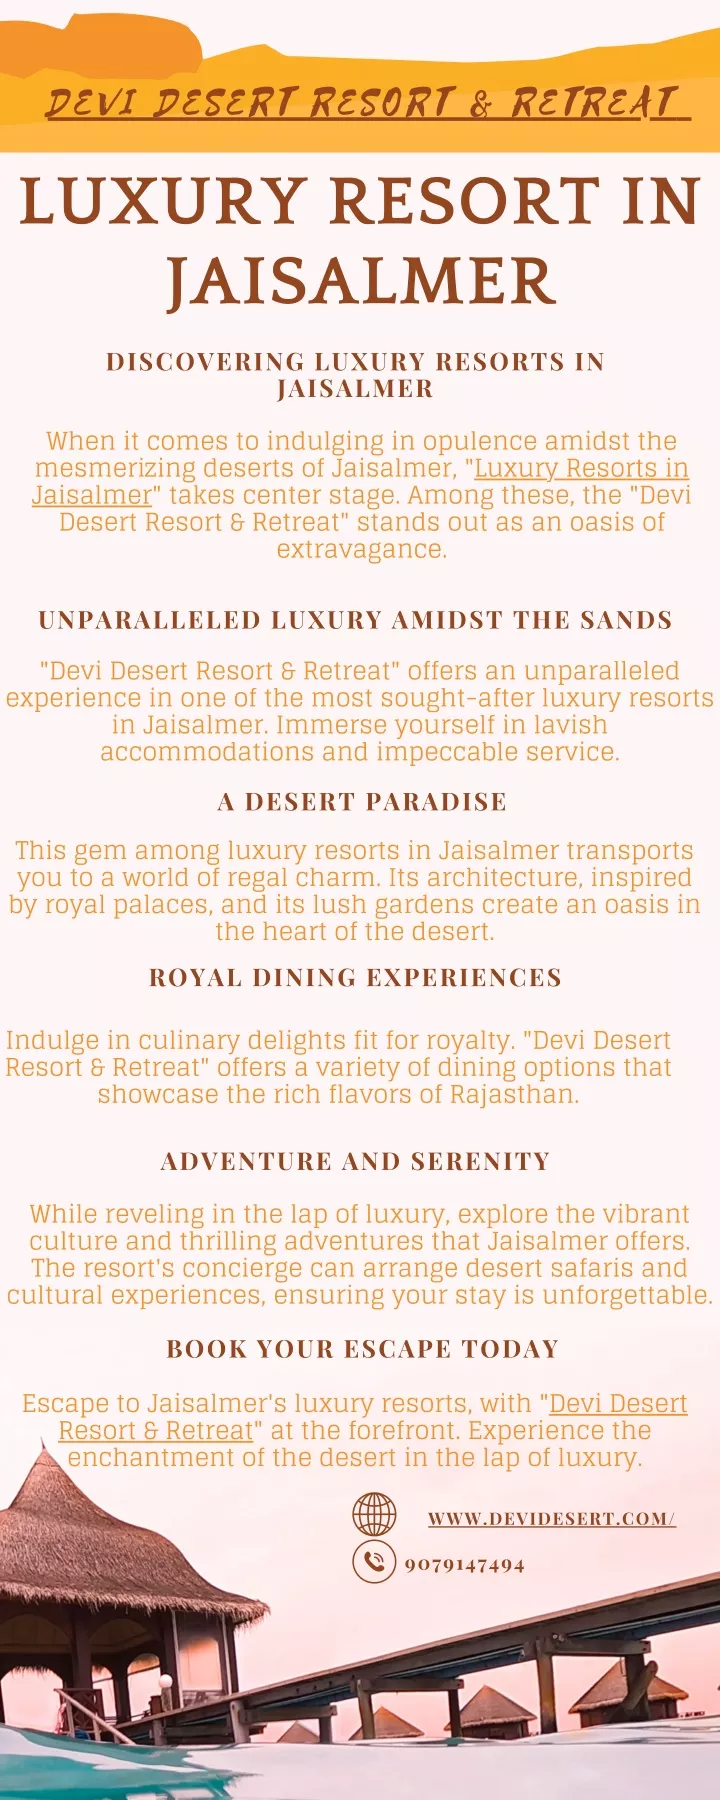 devi desert resort retreat